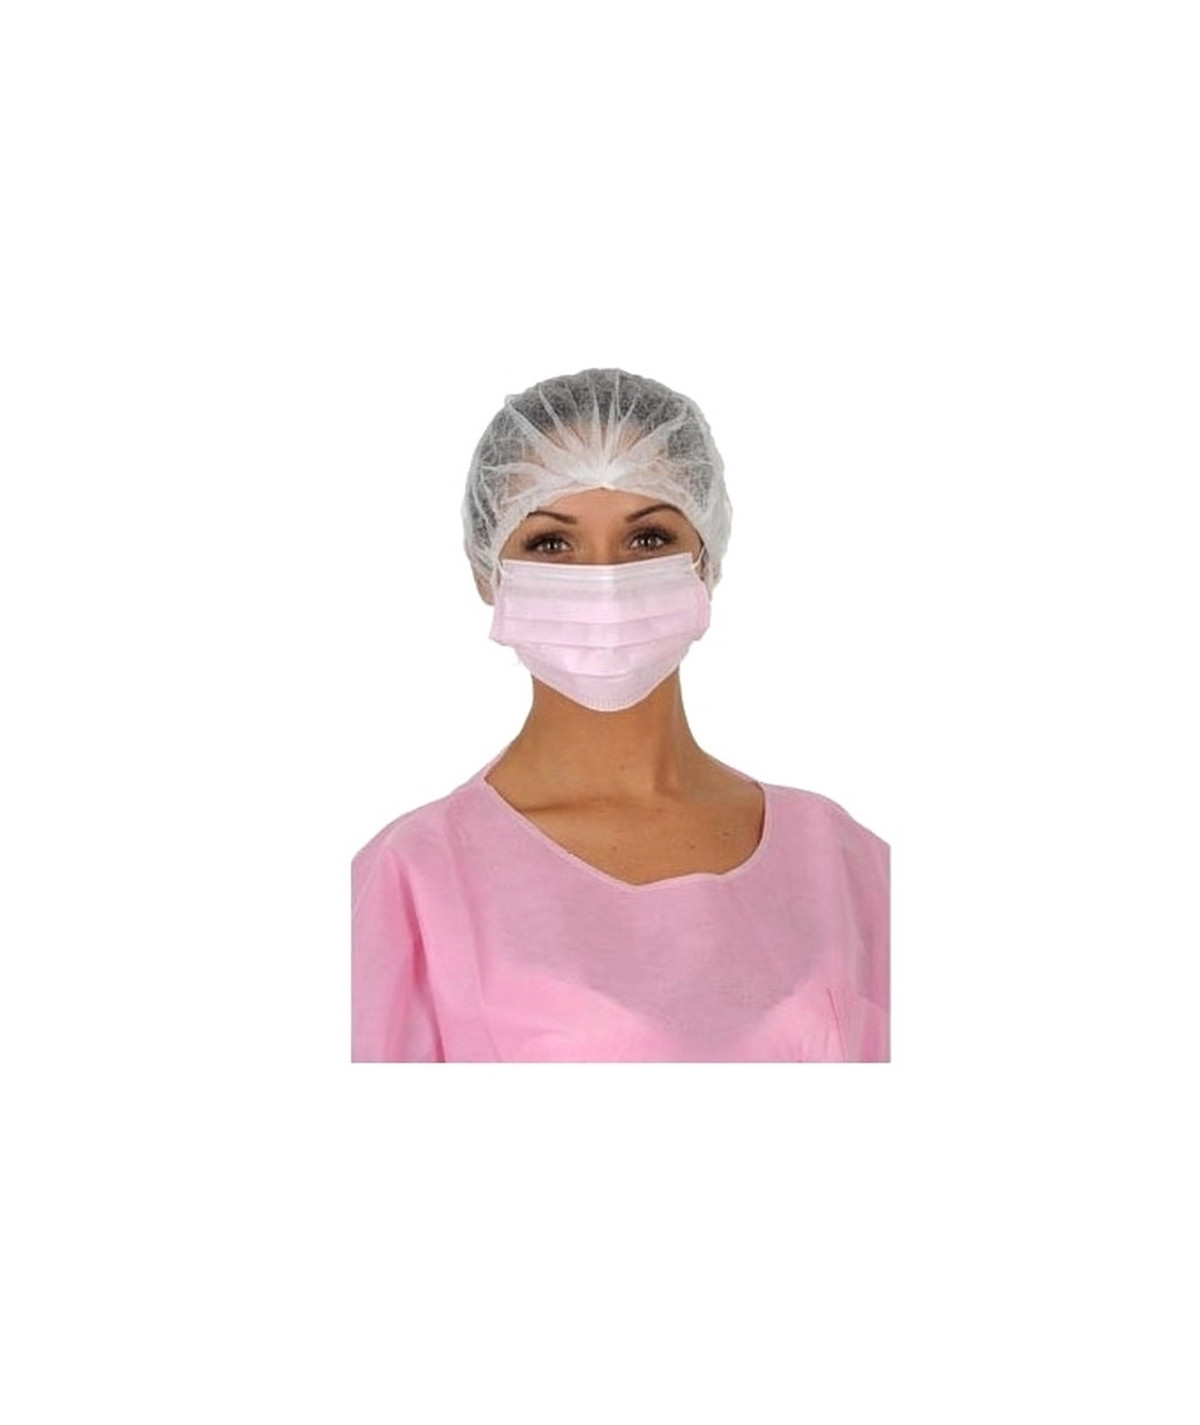 Masque de chirurgie rose 3 plis - Avec élastique - Mask + IIR Medistock - Boite de 50